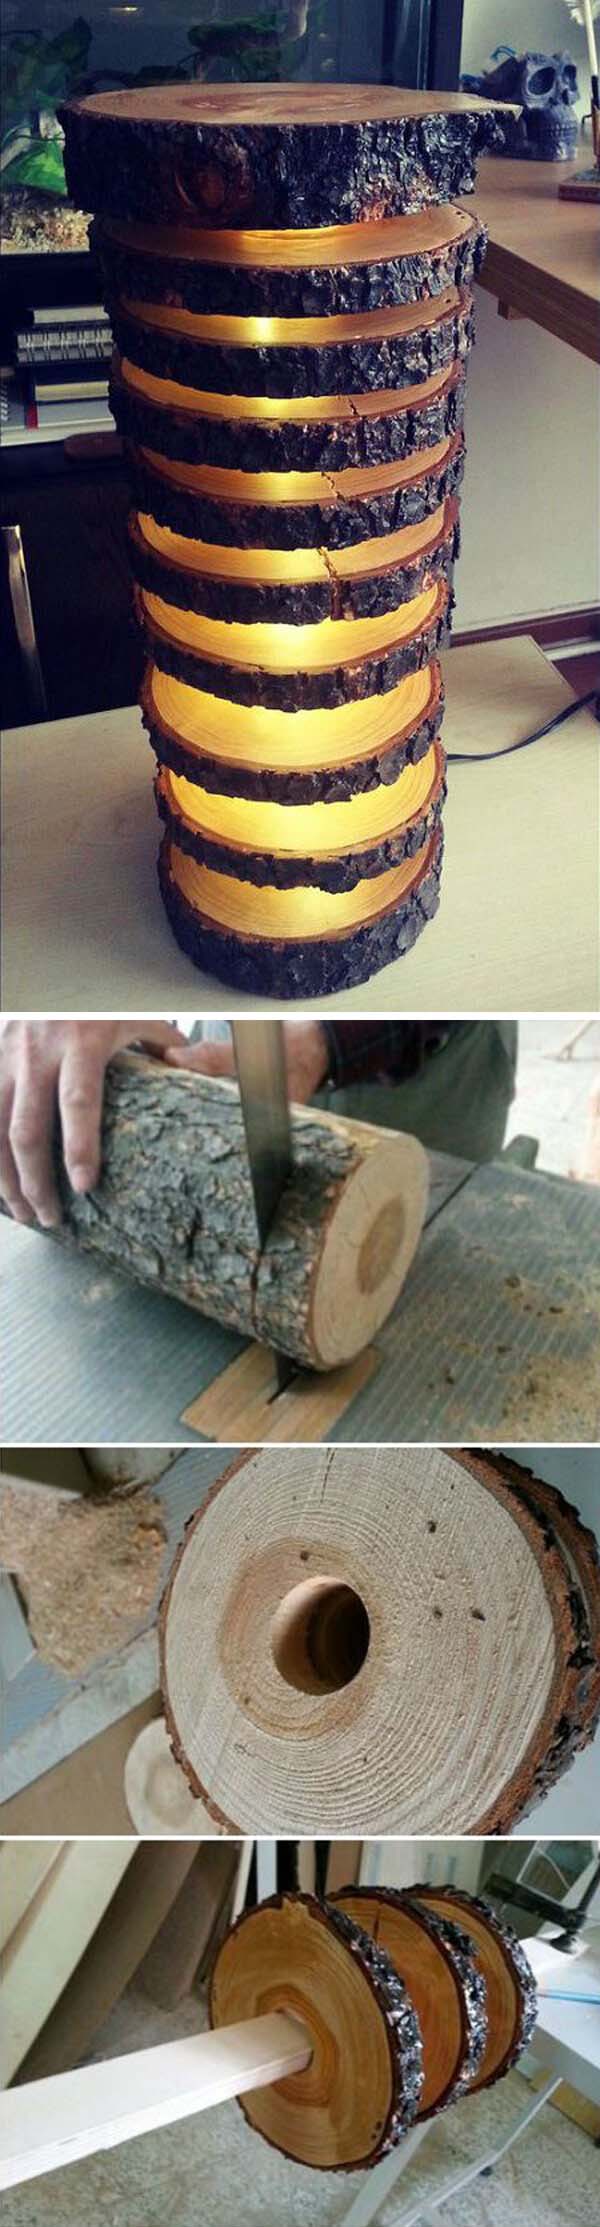 How to Make a Spectacular Floor Log Lamp #diy #wood #crafts #decorhomeideas